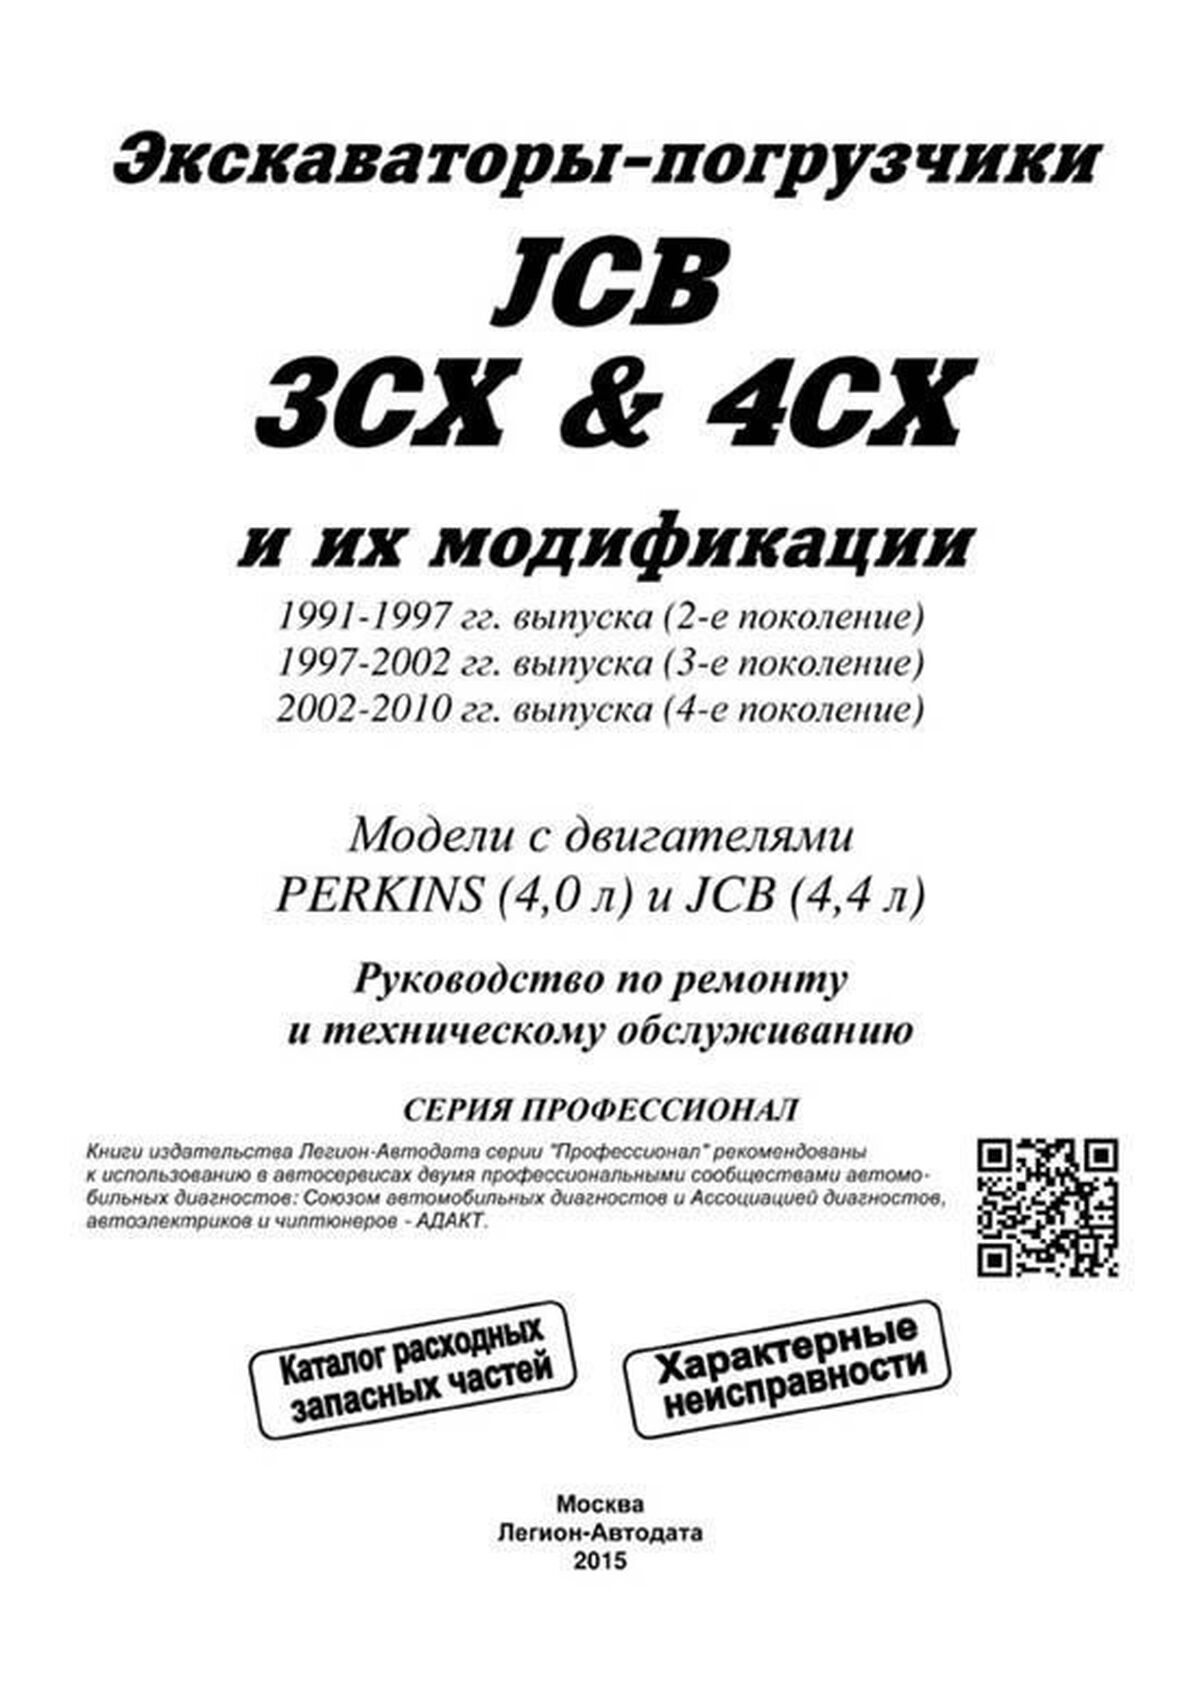 Книга: Экскаваторы-погрузчики JCB 3CX / 4CX и их модификации 1991-2010 г.в., (д) (PERKINS и JCB), рем., экспл., то, сер.ПРОФ. | Легион-Aвтодата